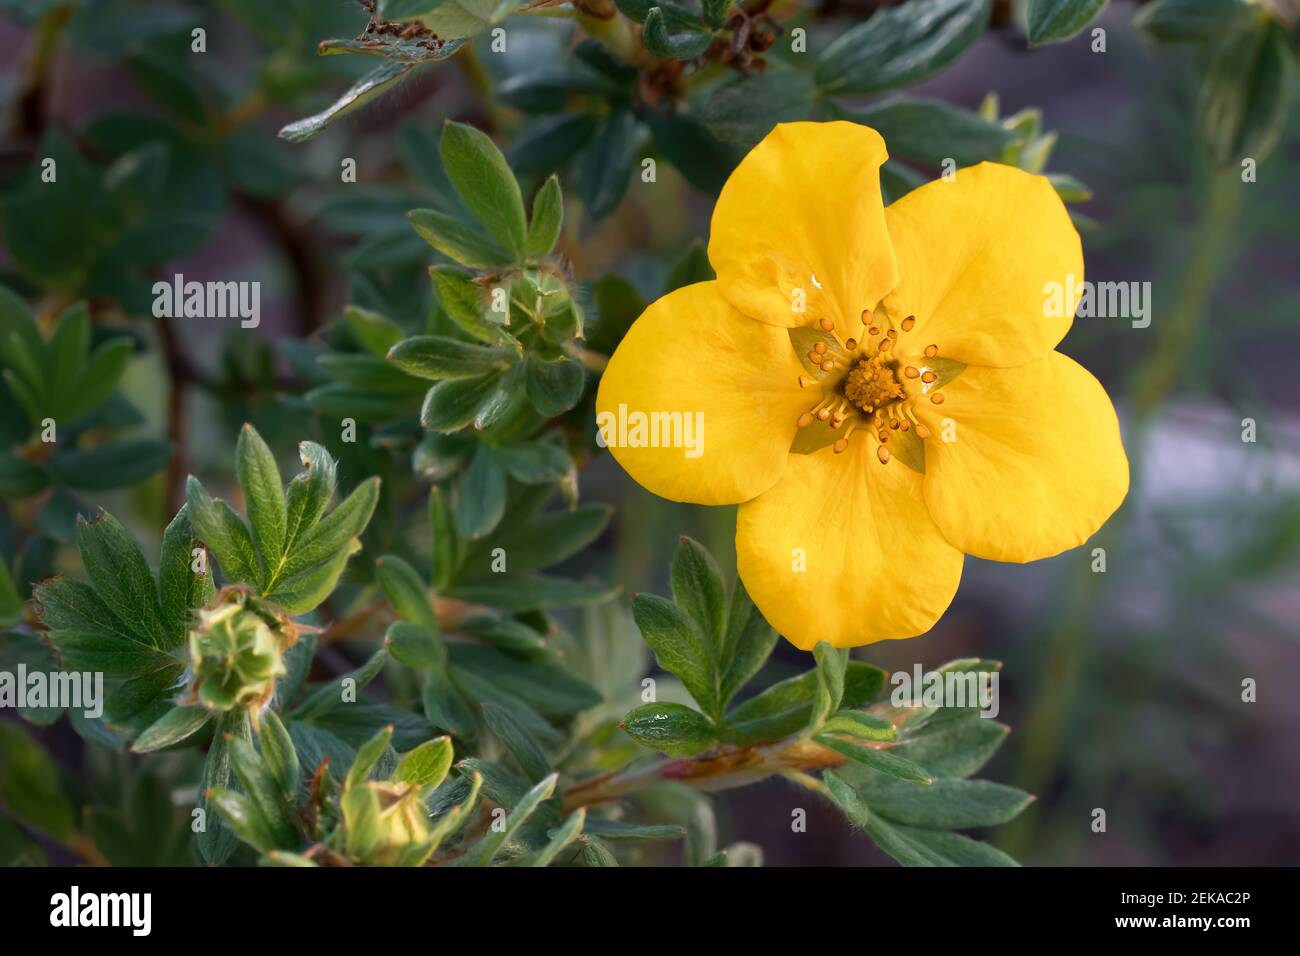 Yellow flower of Potentilla shrub in the garden close up. Stock Photo